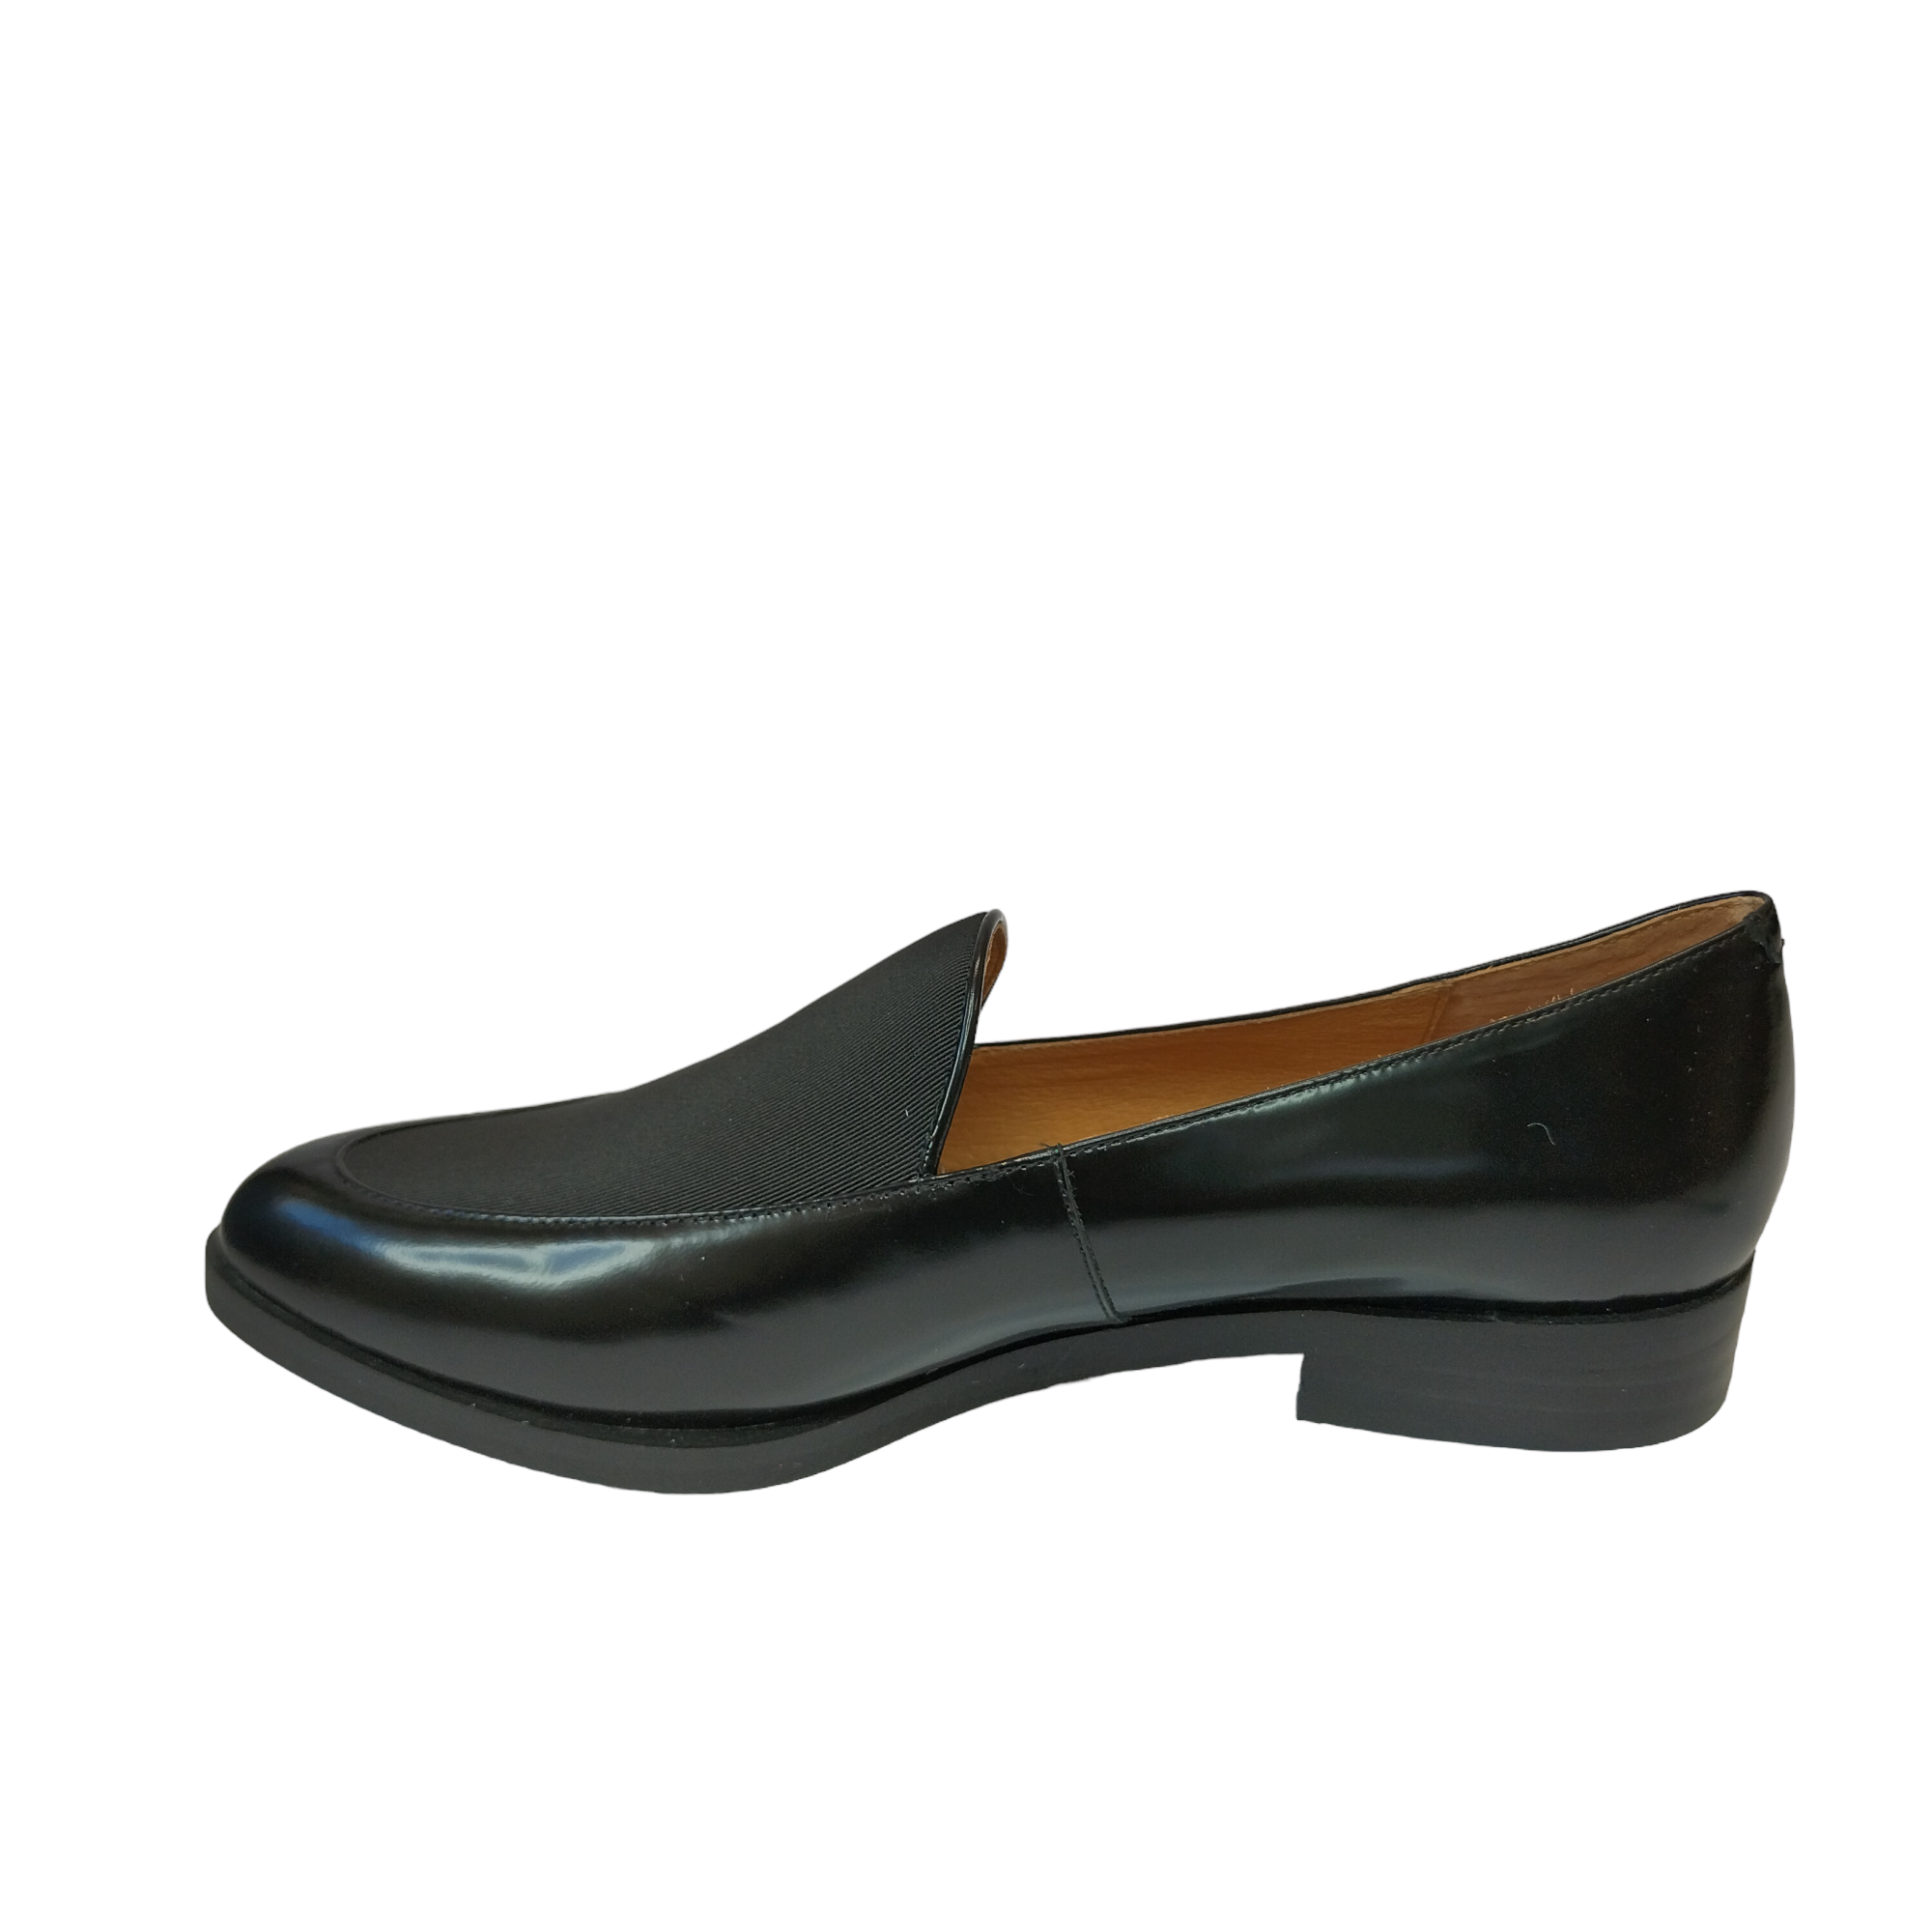 Zada - shoe&amp;me - EOS - Shoe - Loafer, Shoes, Winter, Womens